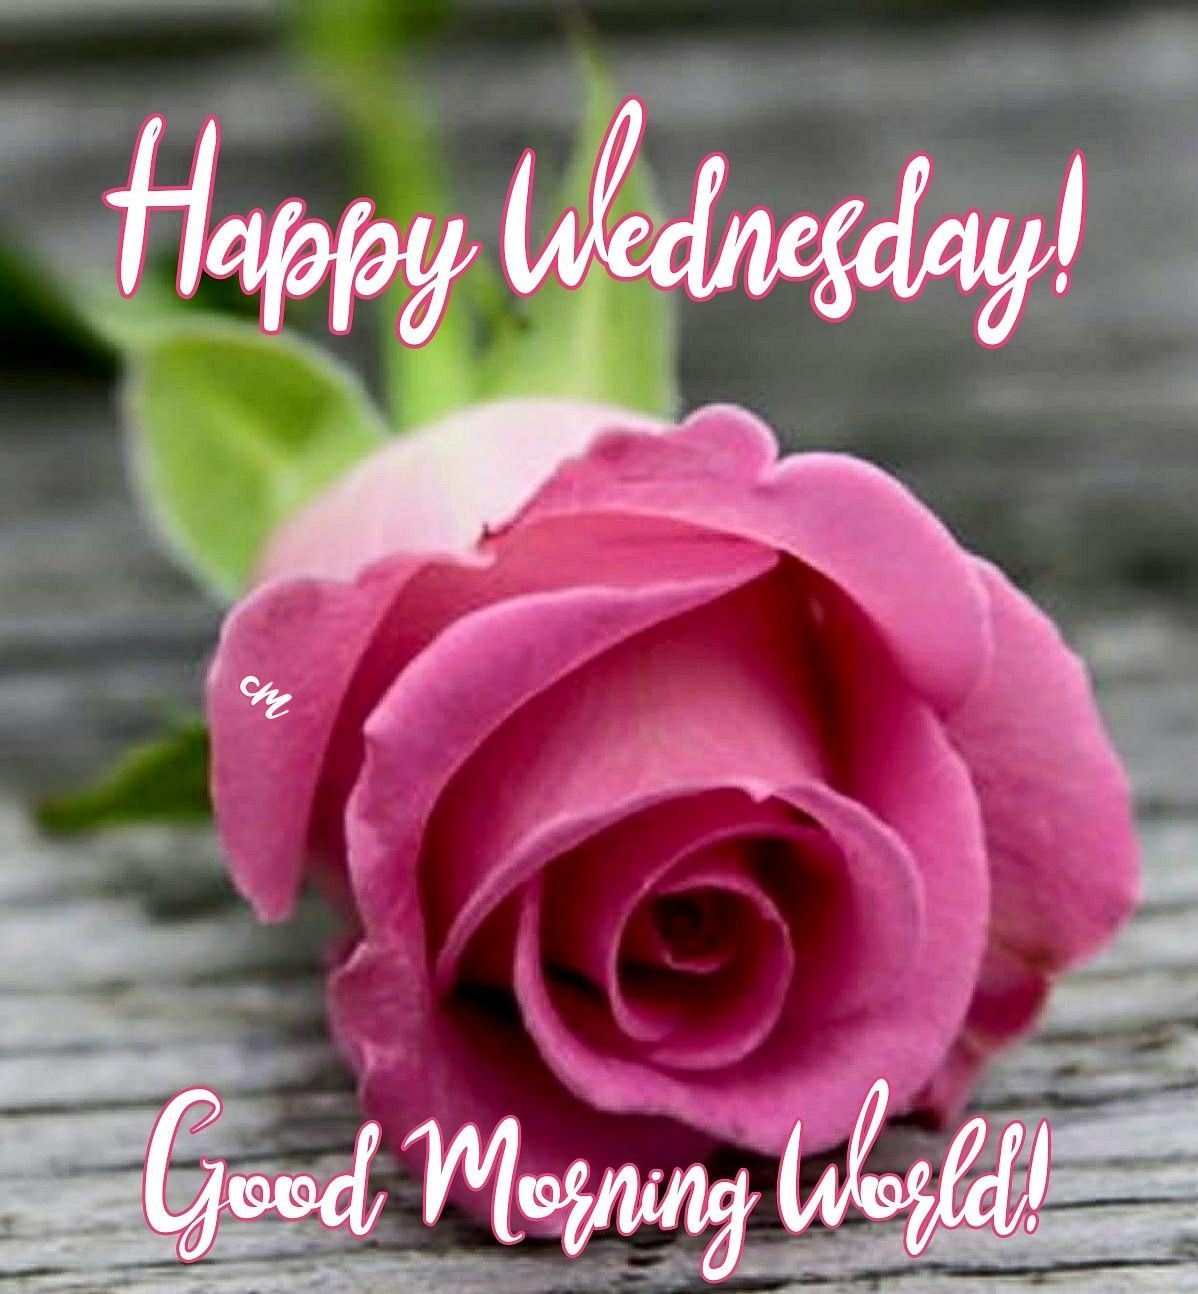 Happy Wednesday! Good Morning World